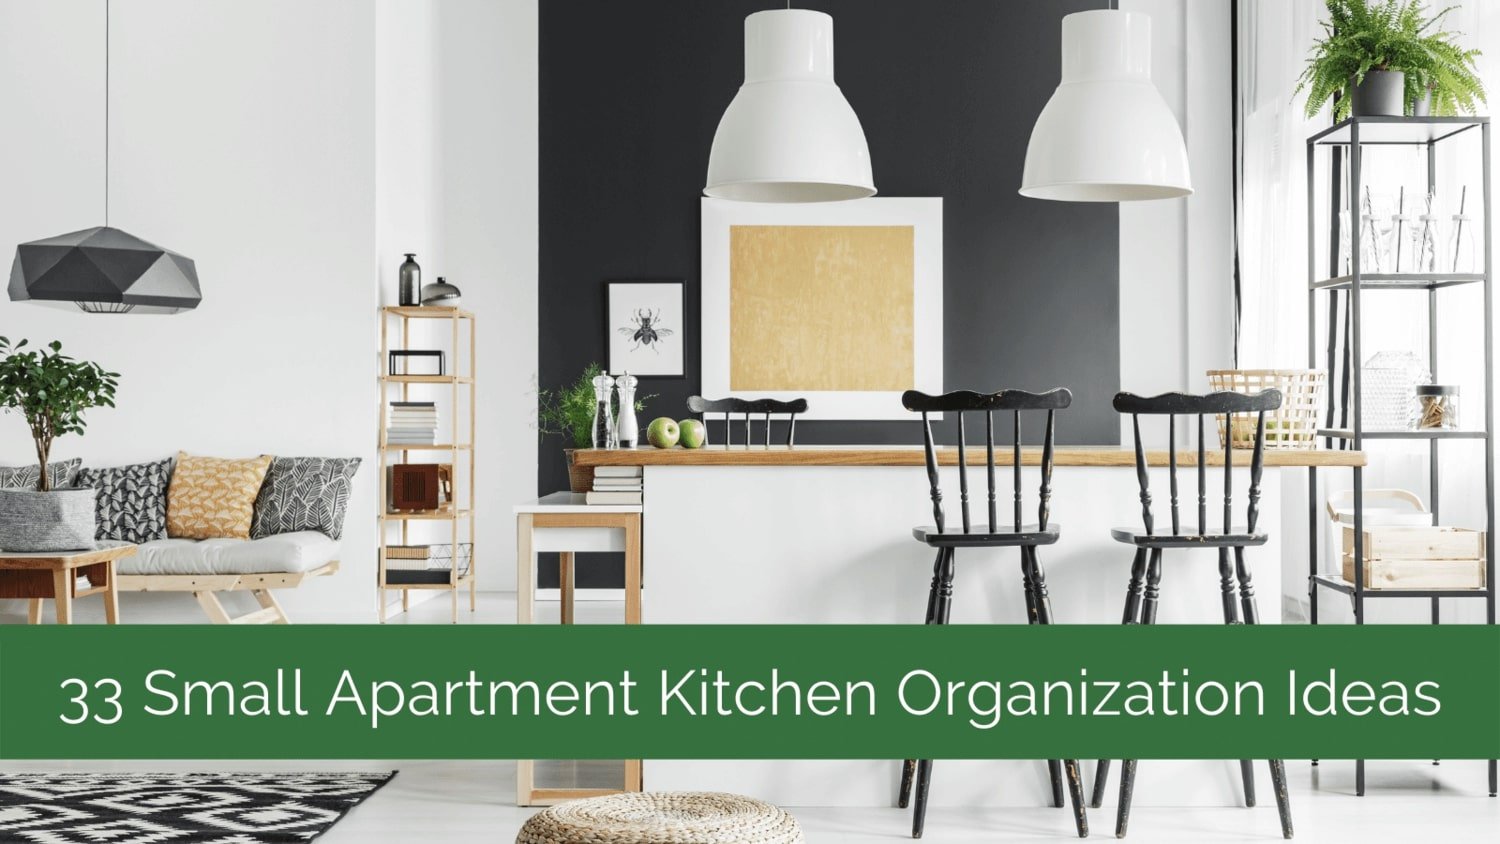 https://images.squarespace-cdn.com/content/v1/60221a7519b886404b103f1c/07835f15-0529-409b-92c9-68ed849da6e9/small-apartment-kitchen-organization-ideas.jpg